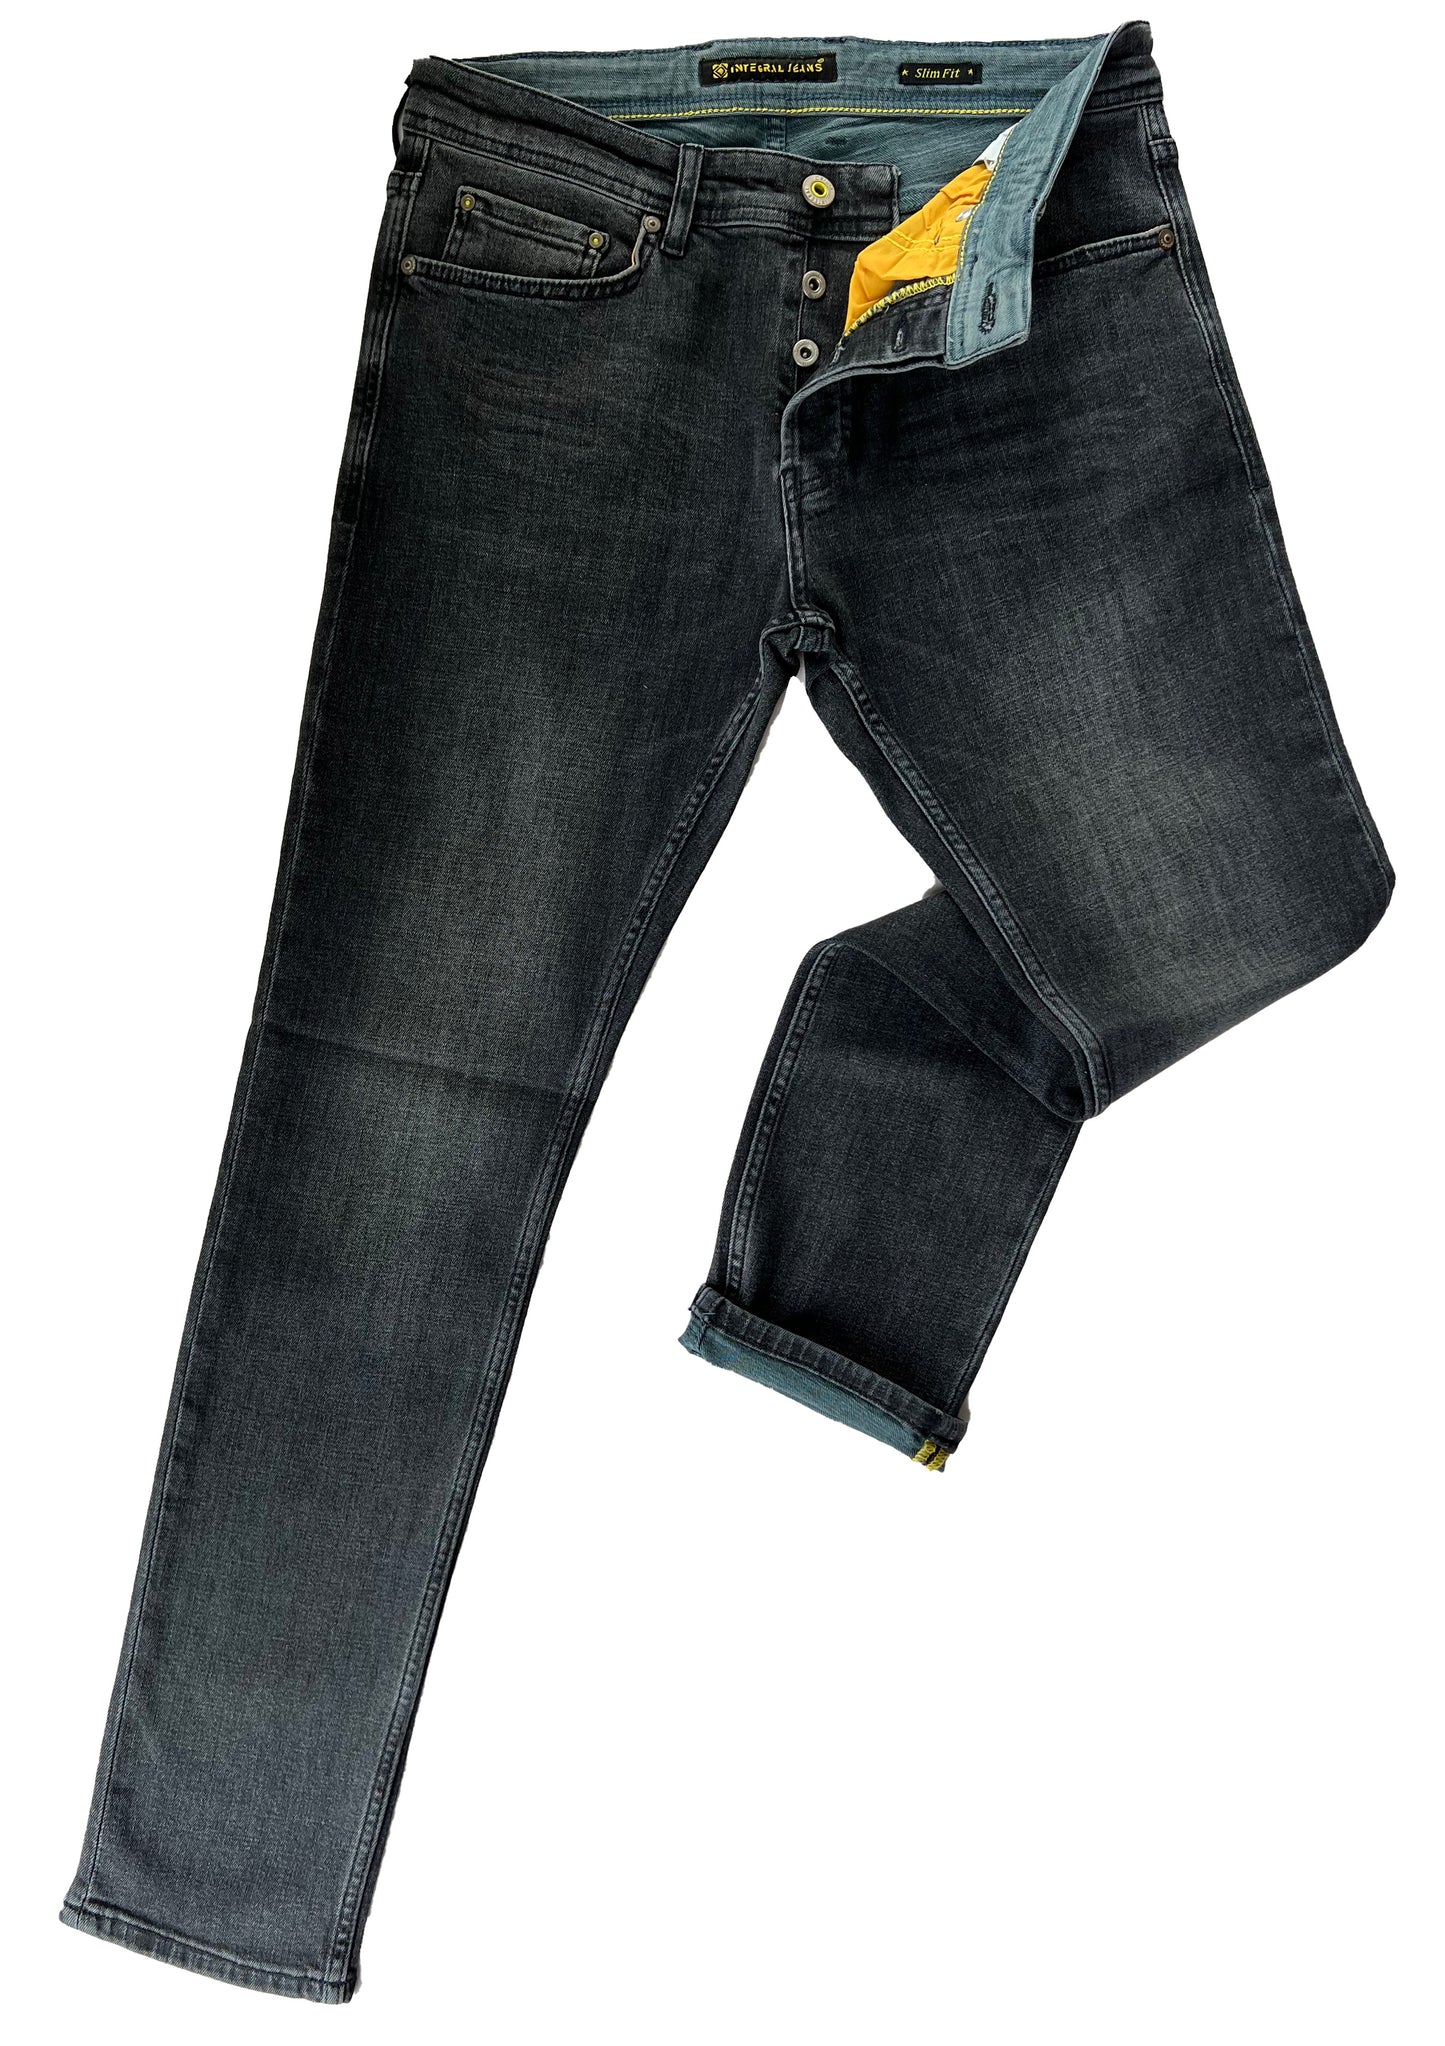 Men's Slim Fit Comfortable Jeans, Trousers- Derby